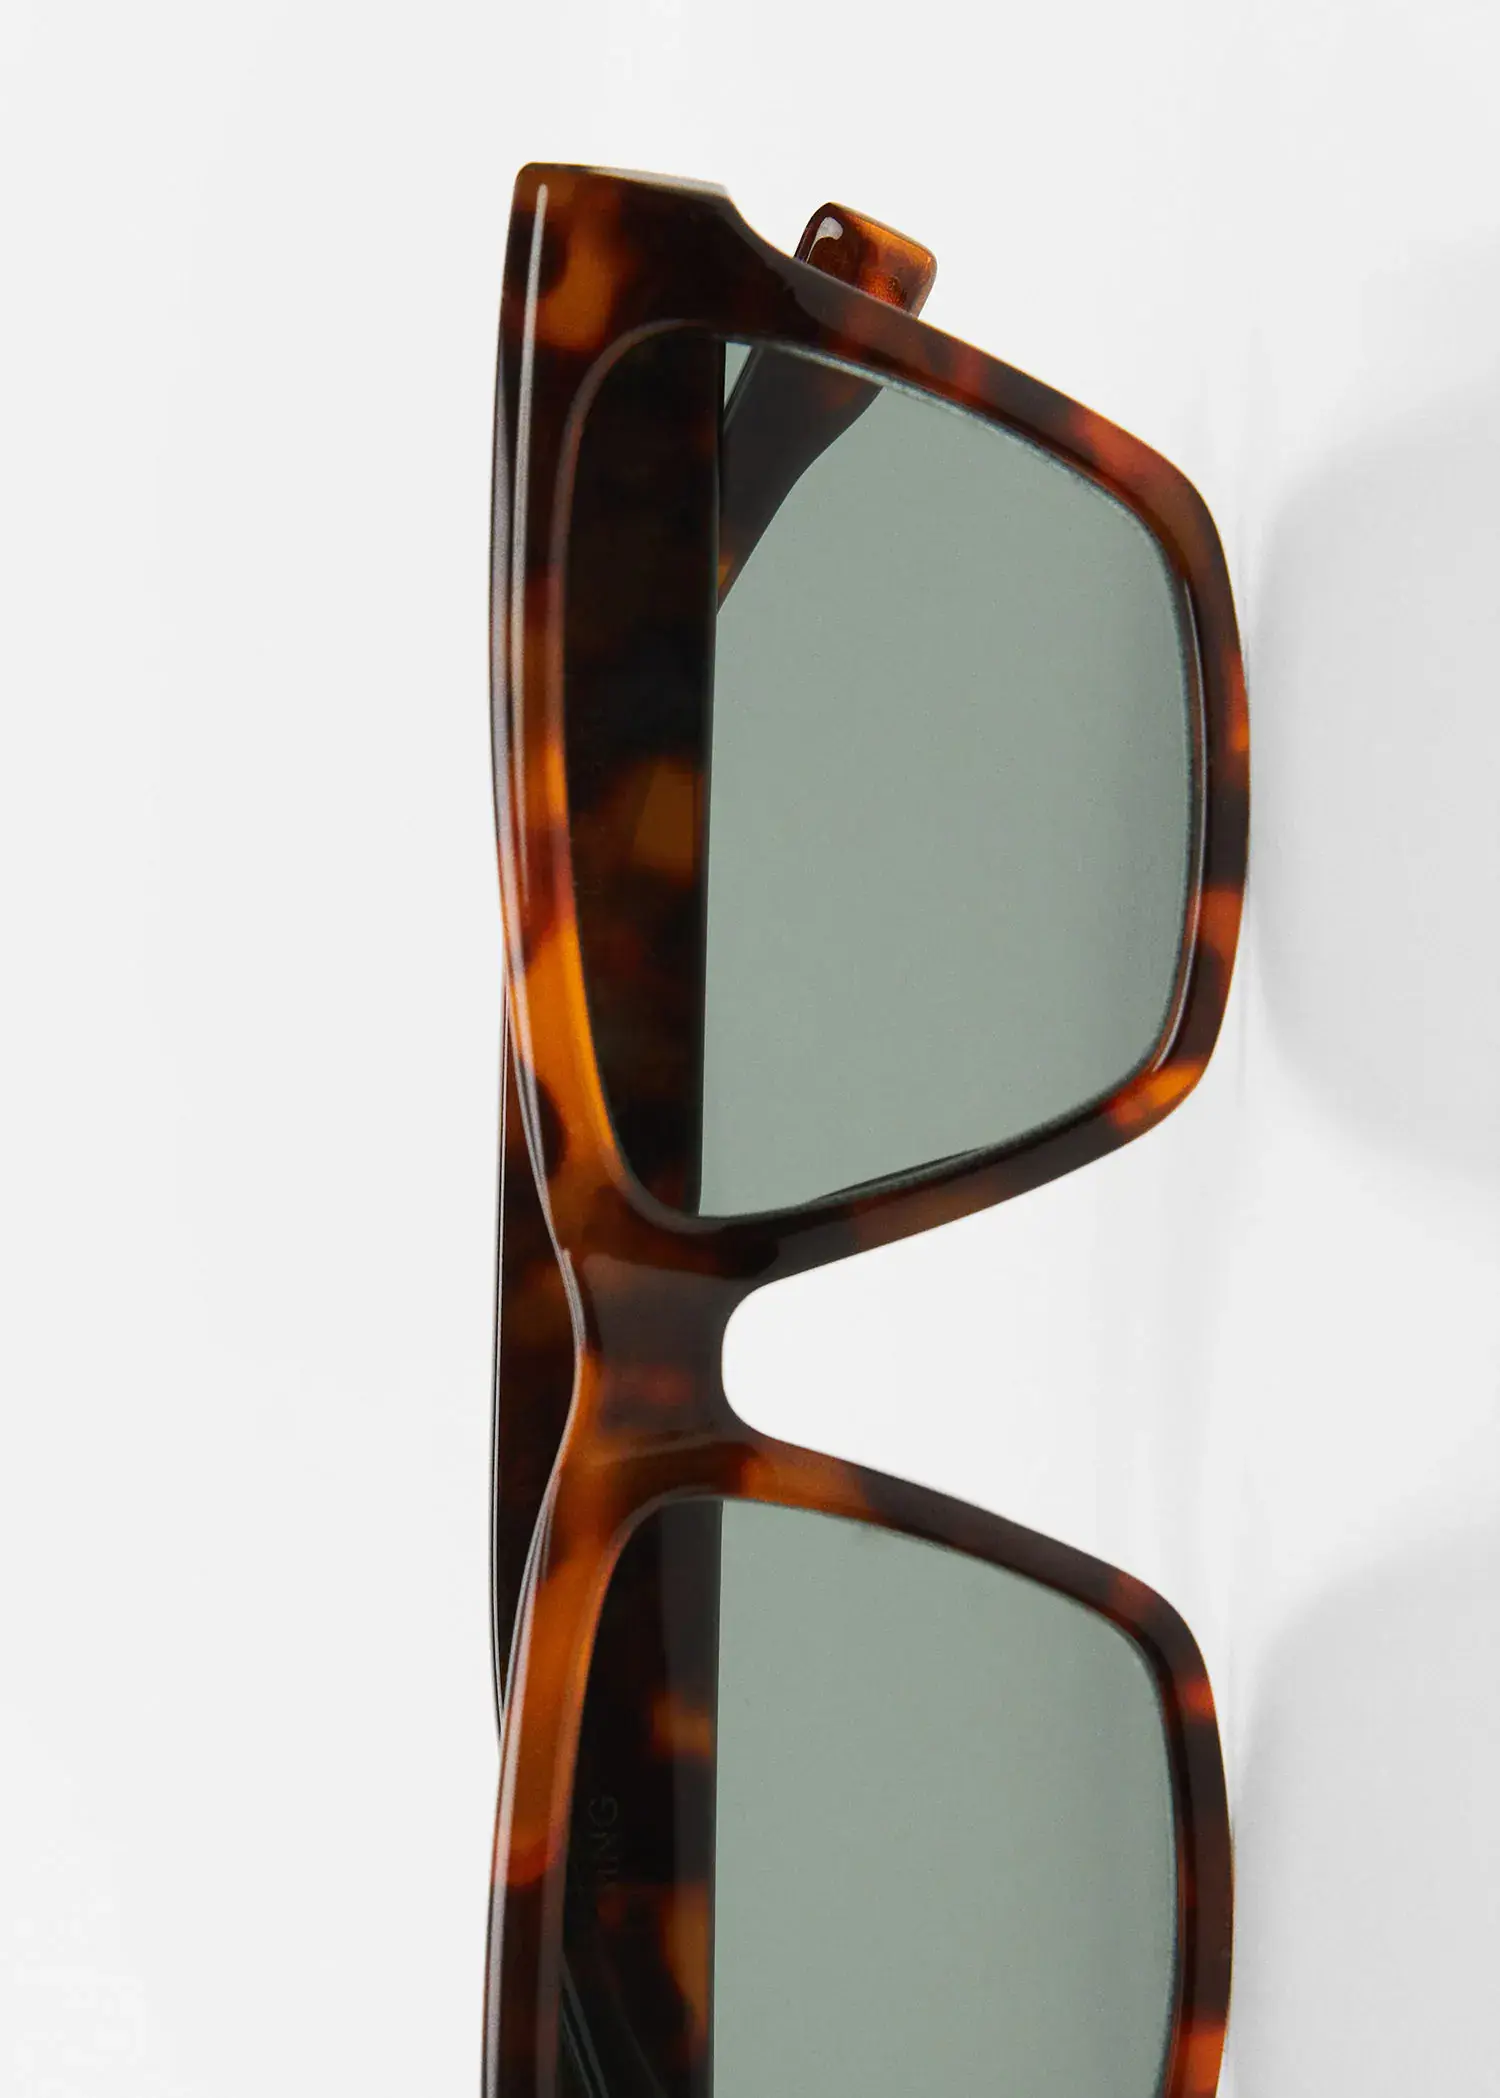 Mango Acetate frame sunglasses. 3